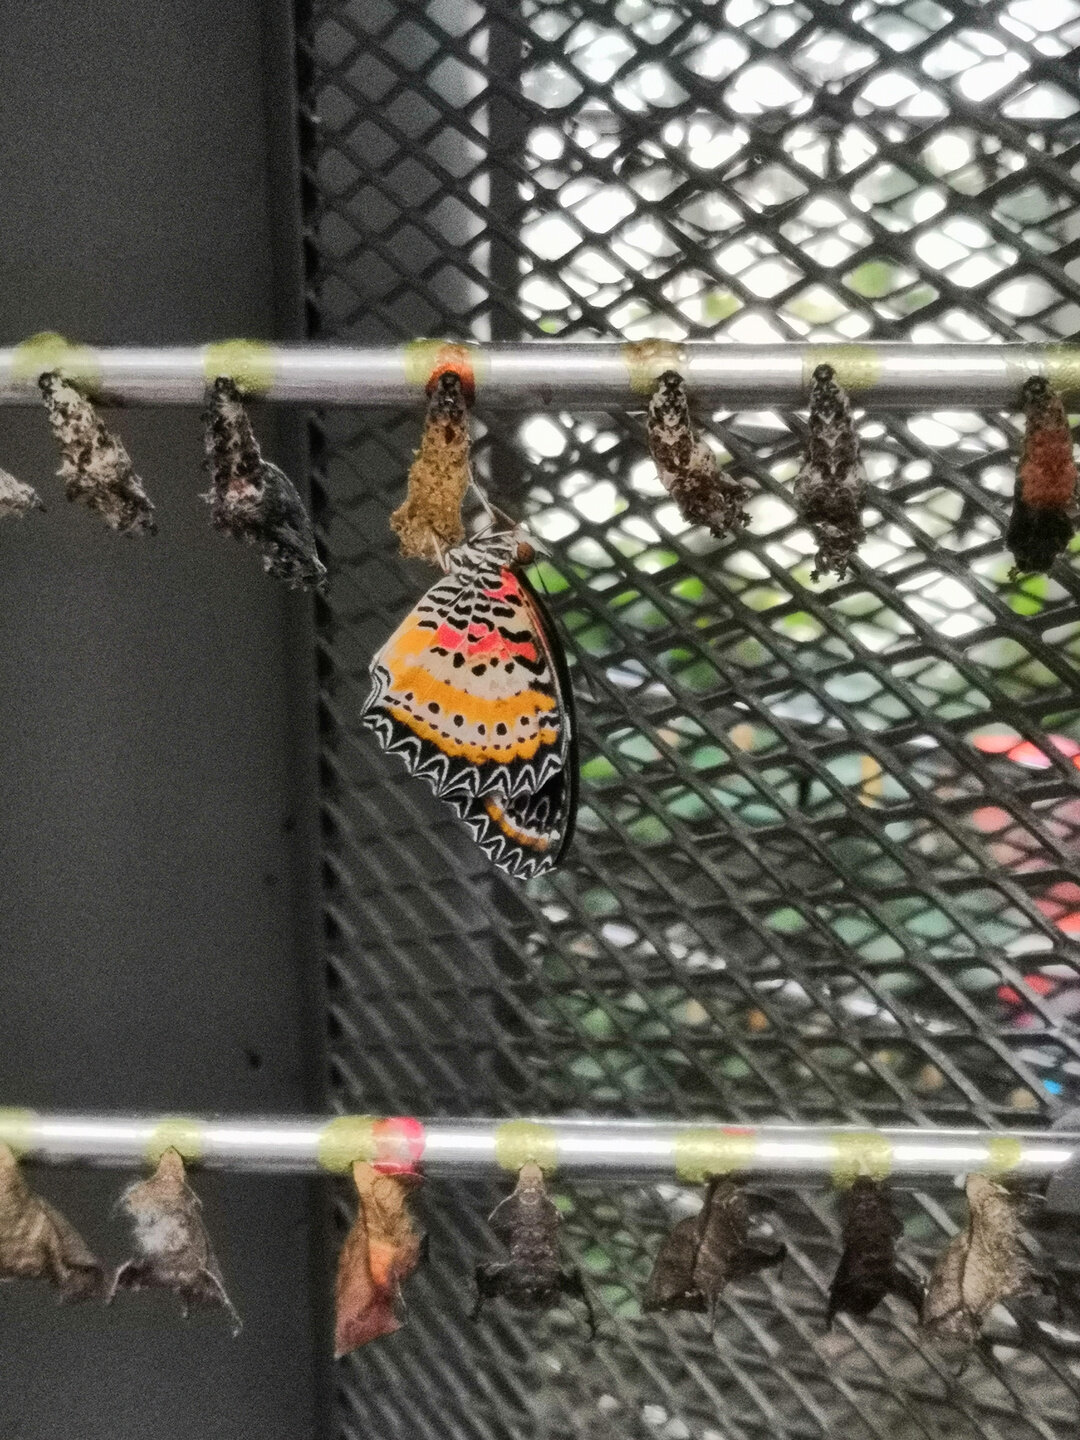 <span lang="ru">Бабочка вылупляется из куколки</span><span lang="en">A butterfly hatches from a pupa</span>